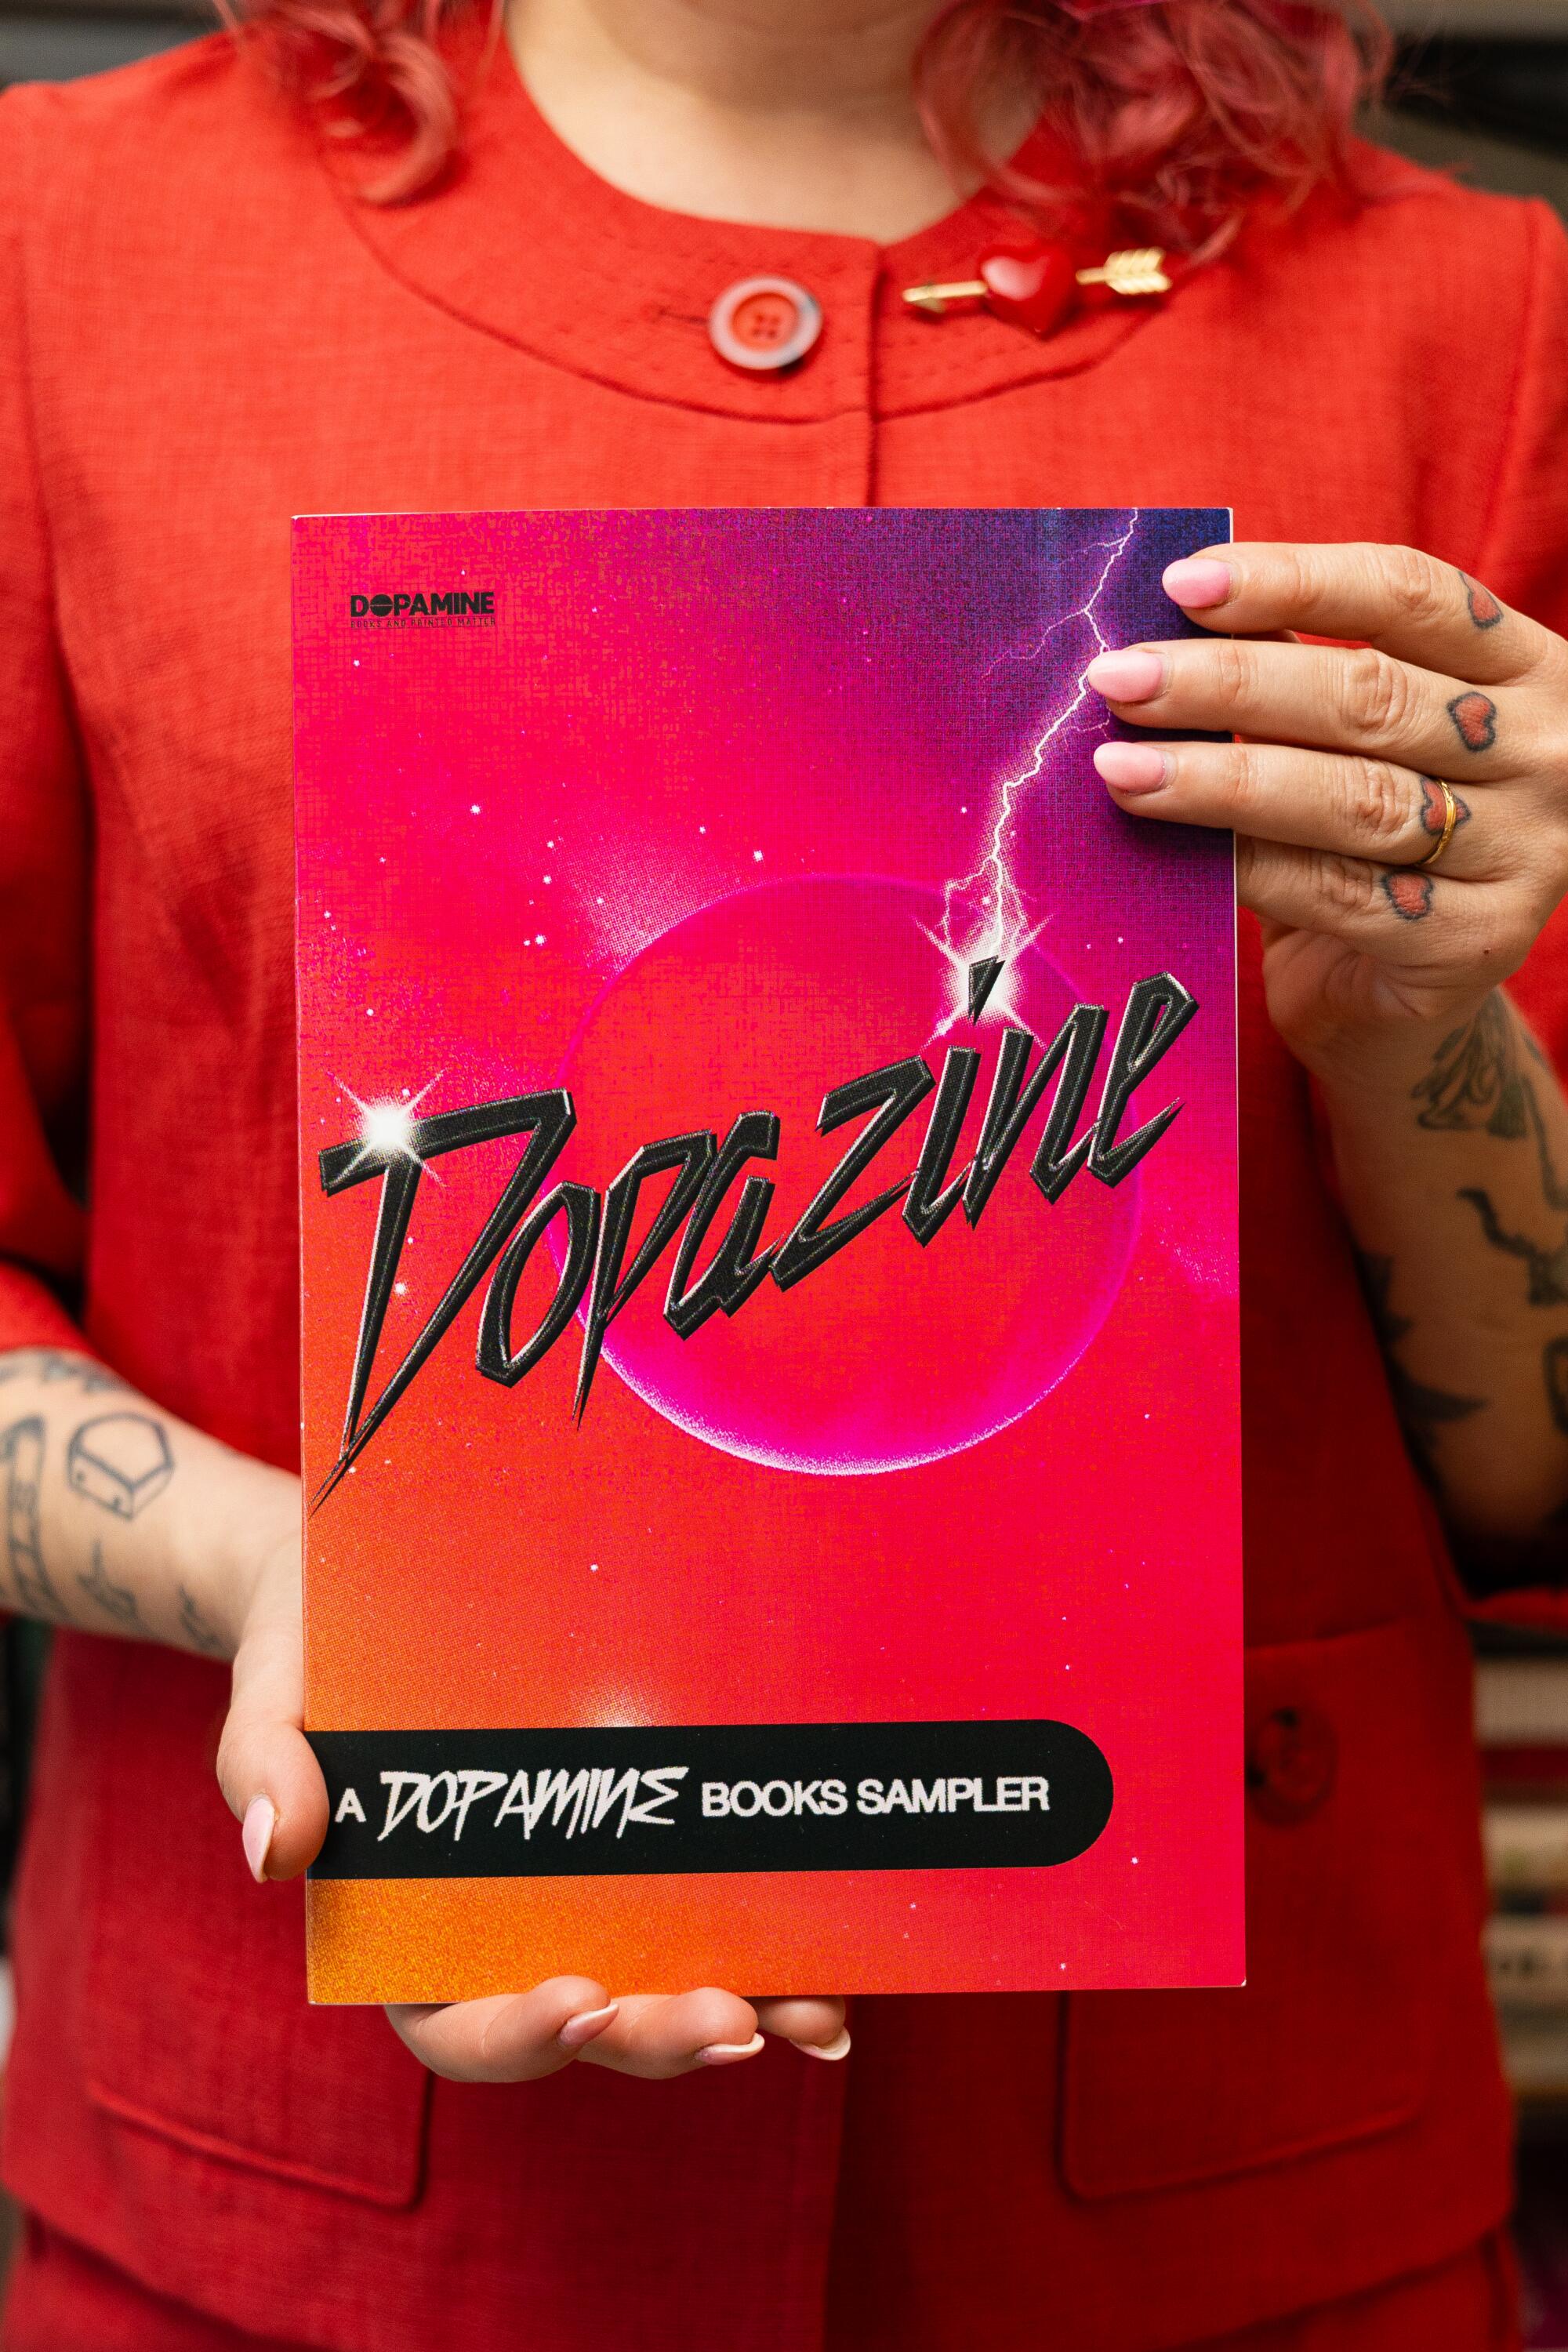 Michelle Tea holds a copy of "Dopazine"